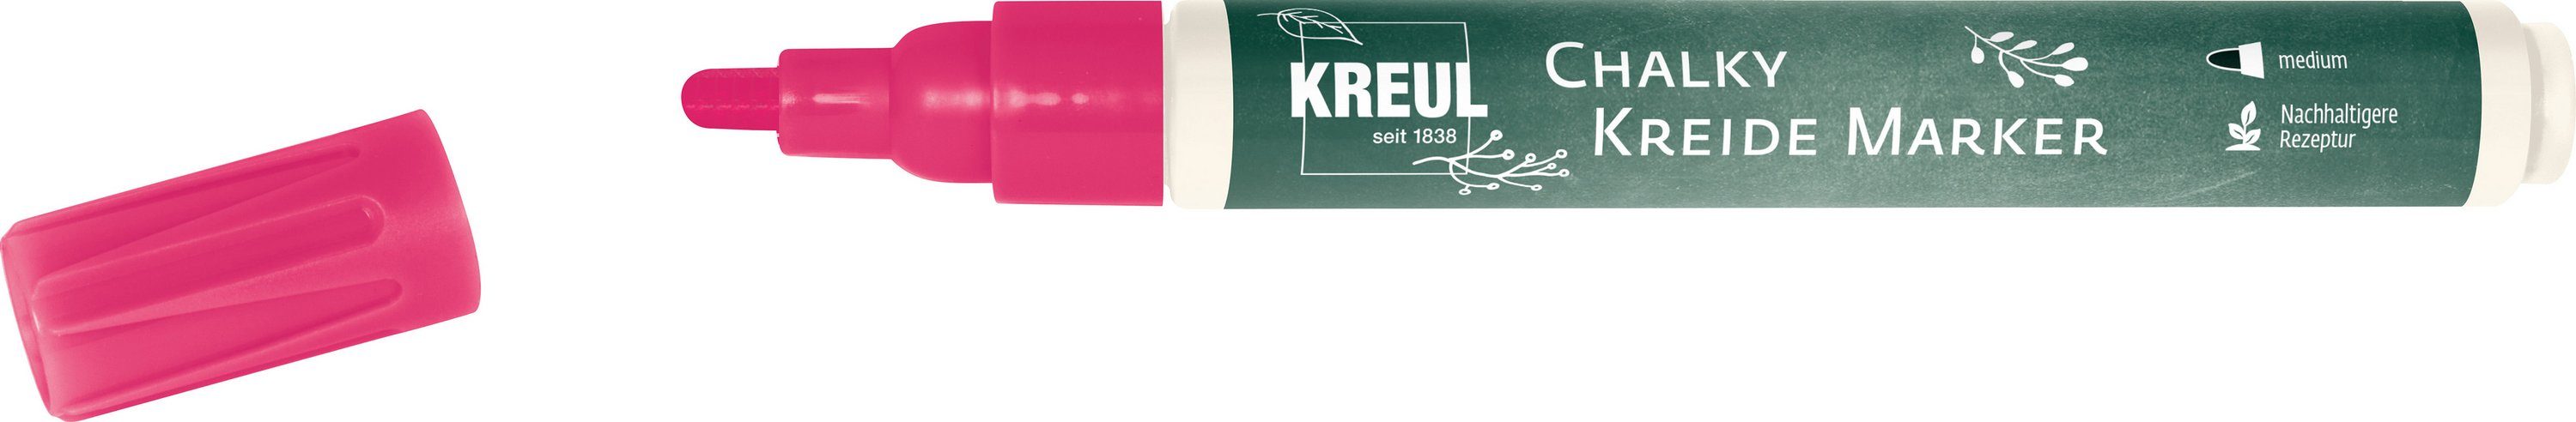 Kreul Kreidemarker Chalky, 2-3mm Strichstärke Neon-Pink | Marker